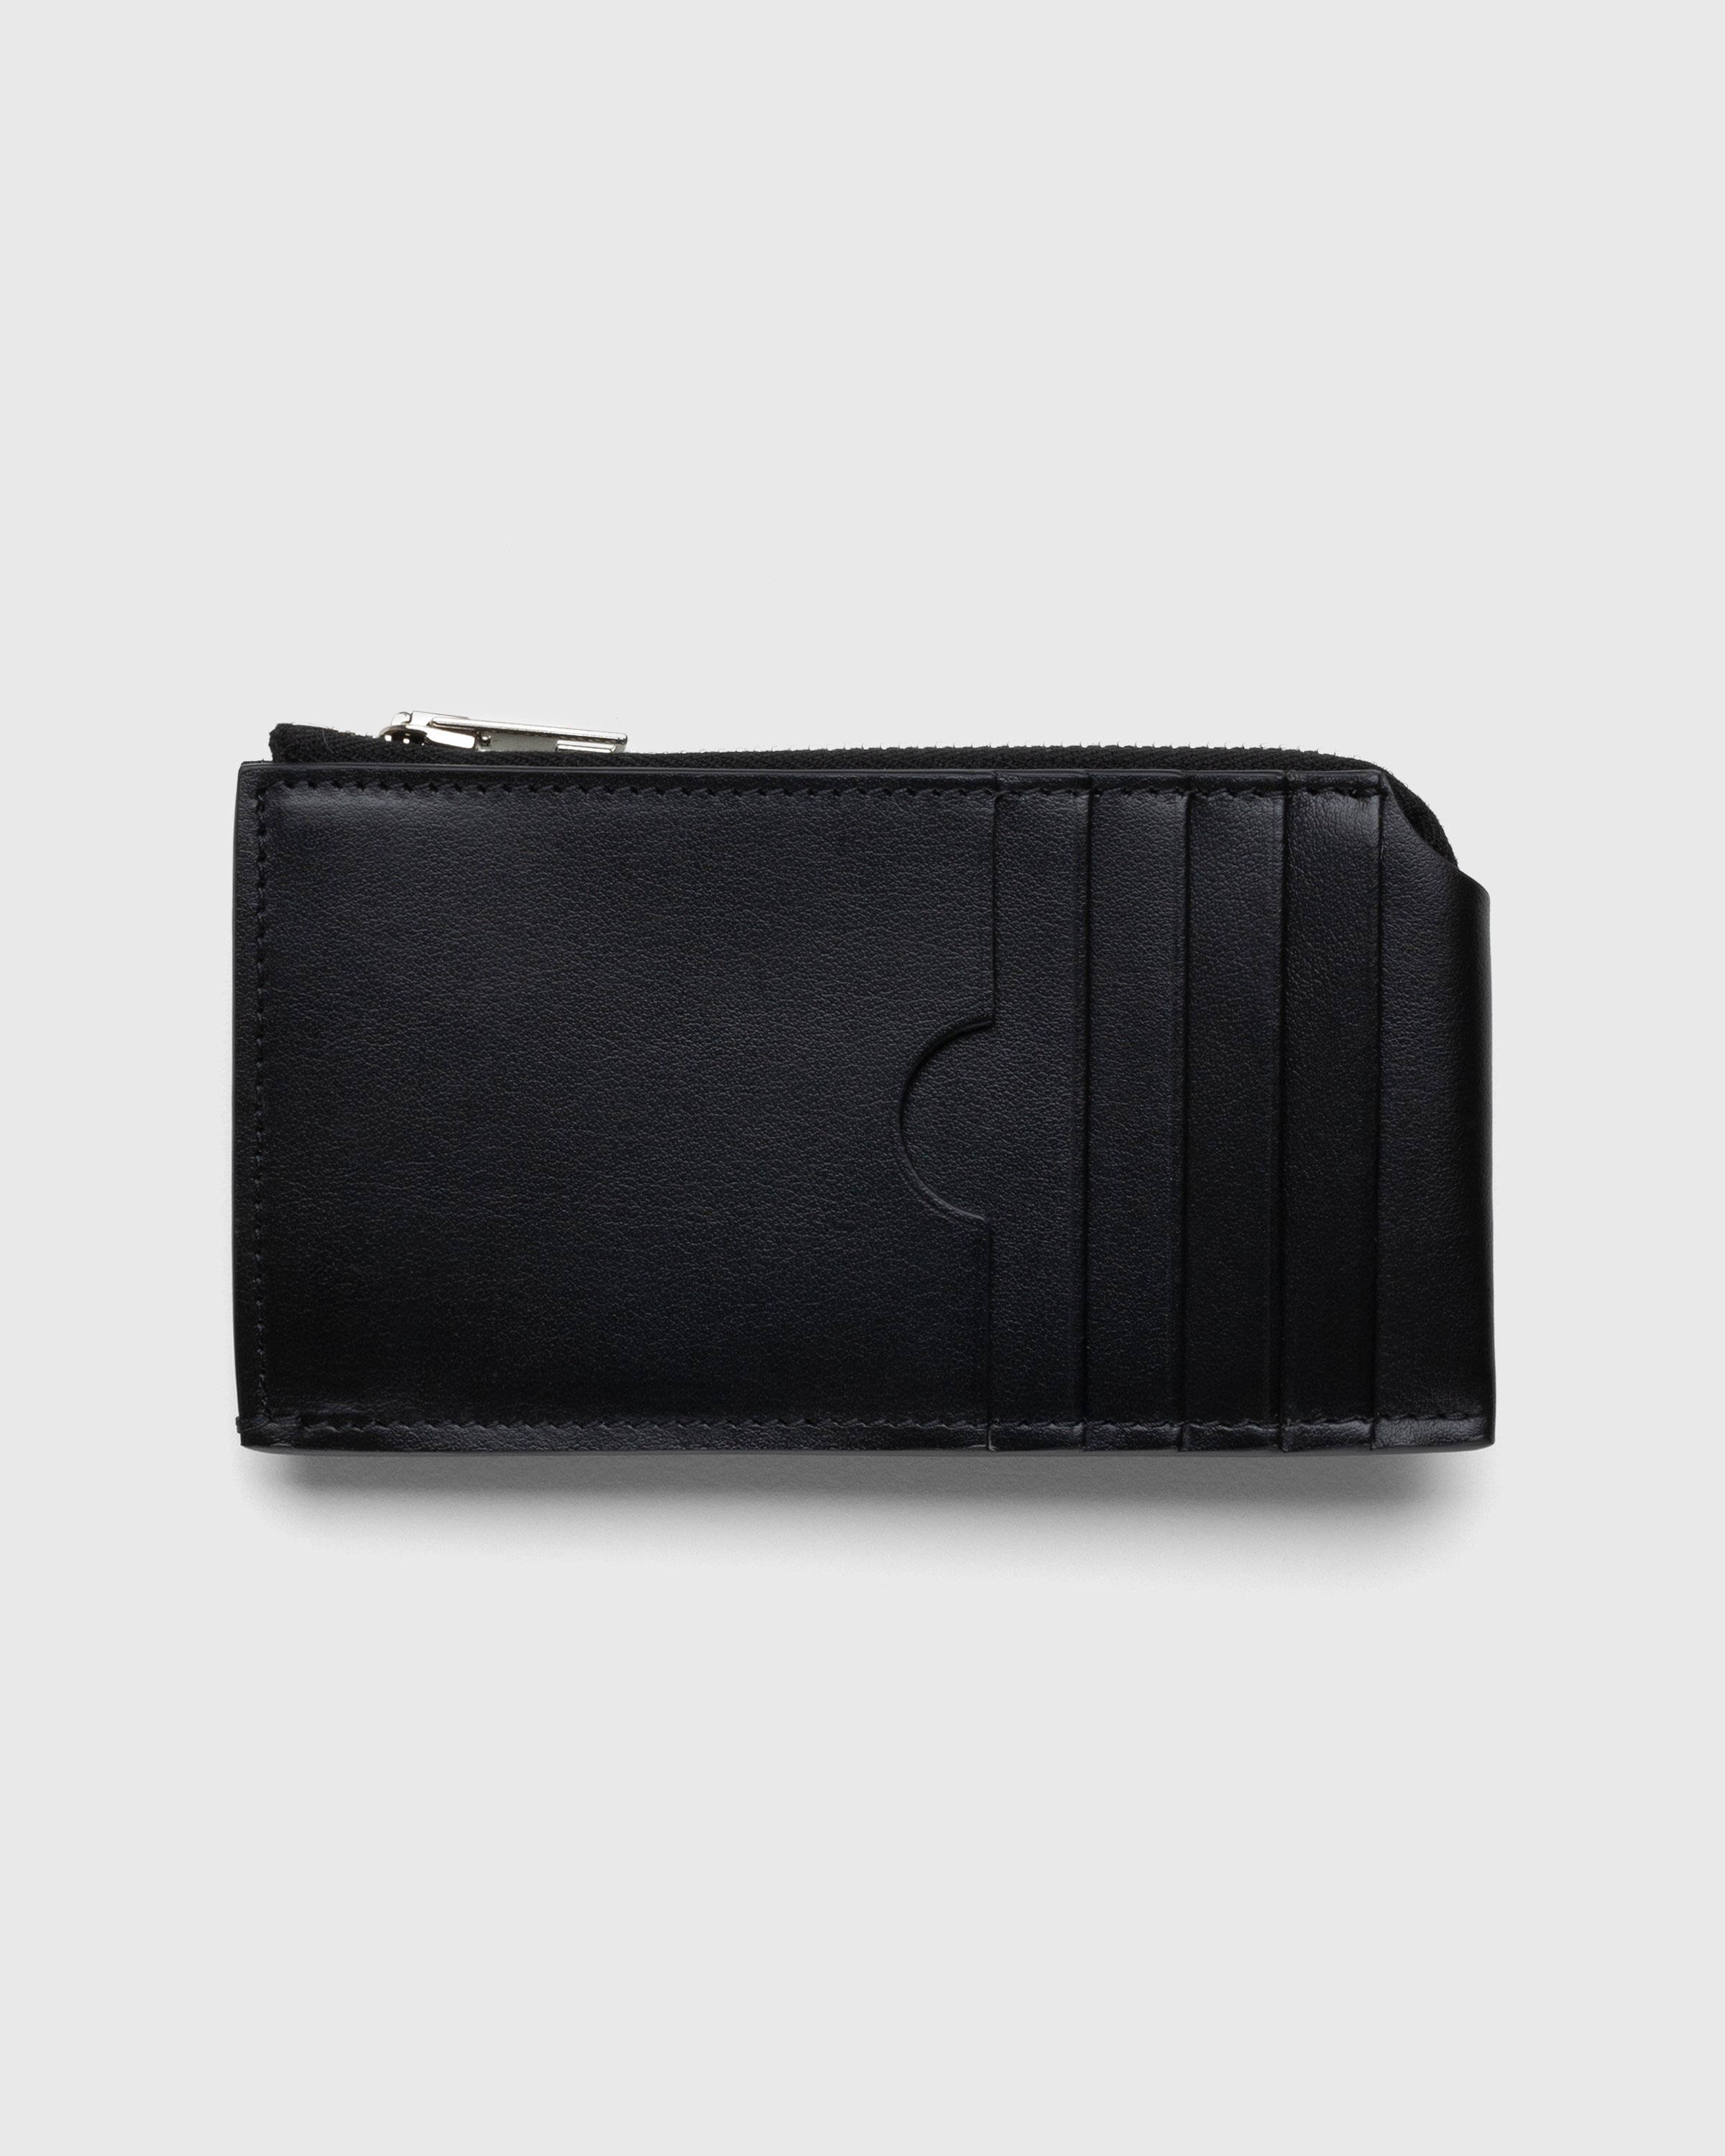 Acne Studios - Leather Zip Wallet Black - Accessories - Black - Image 2